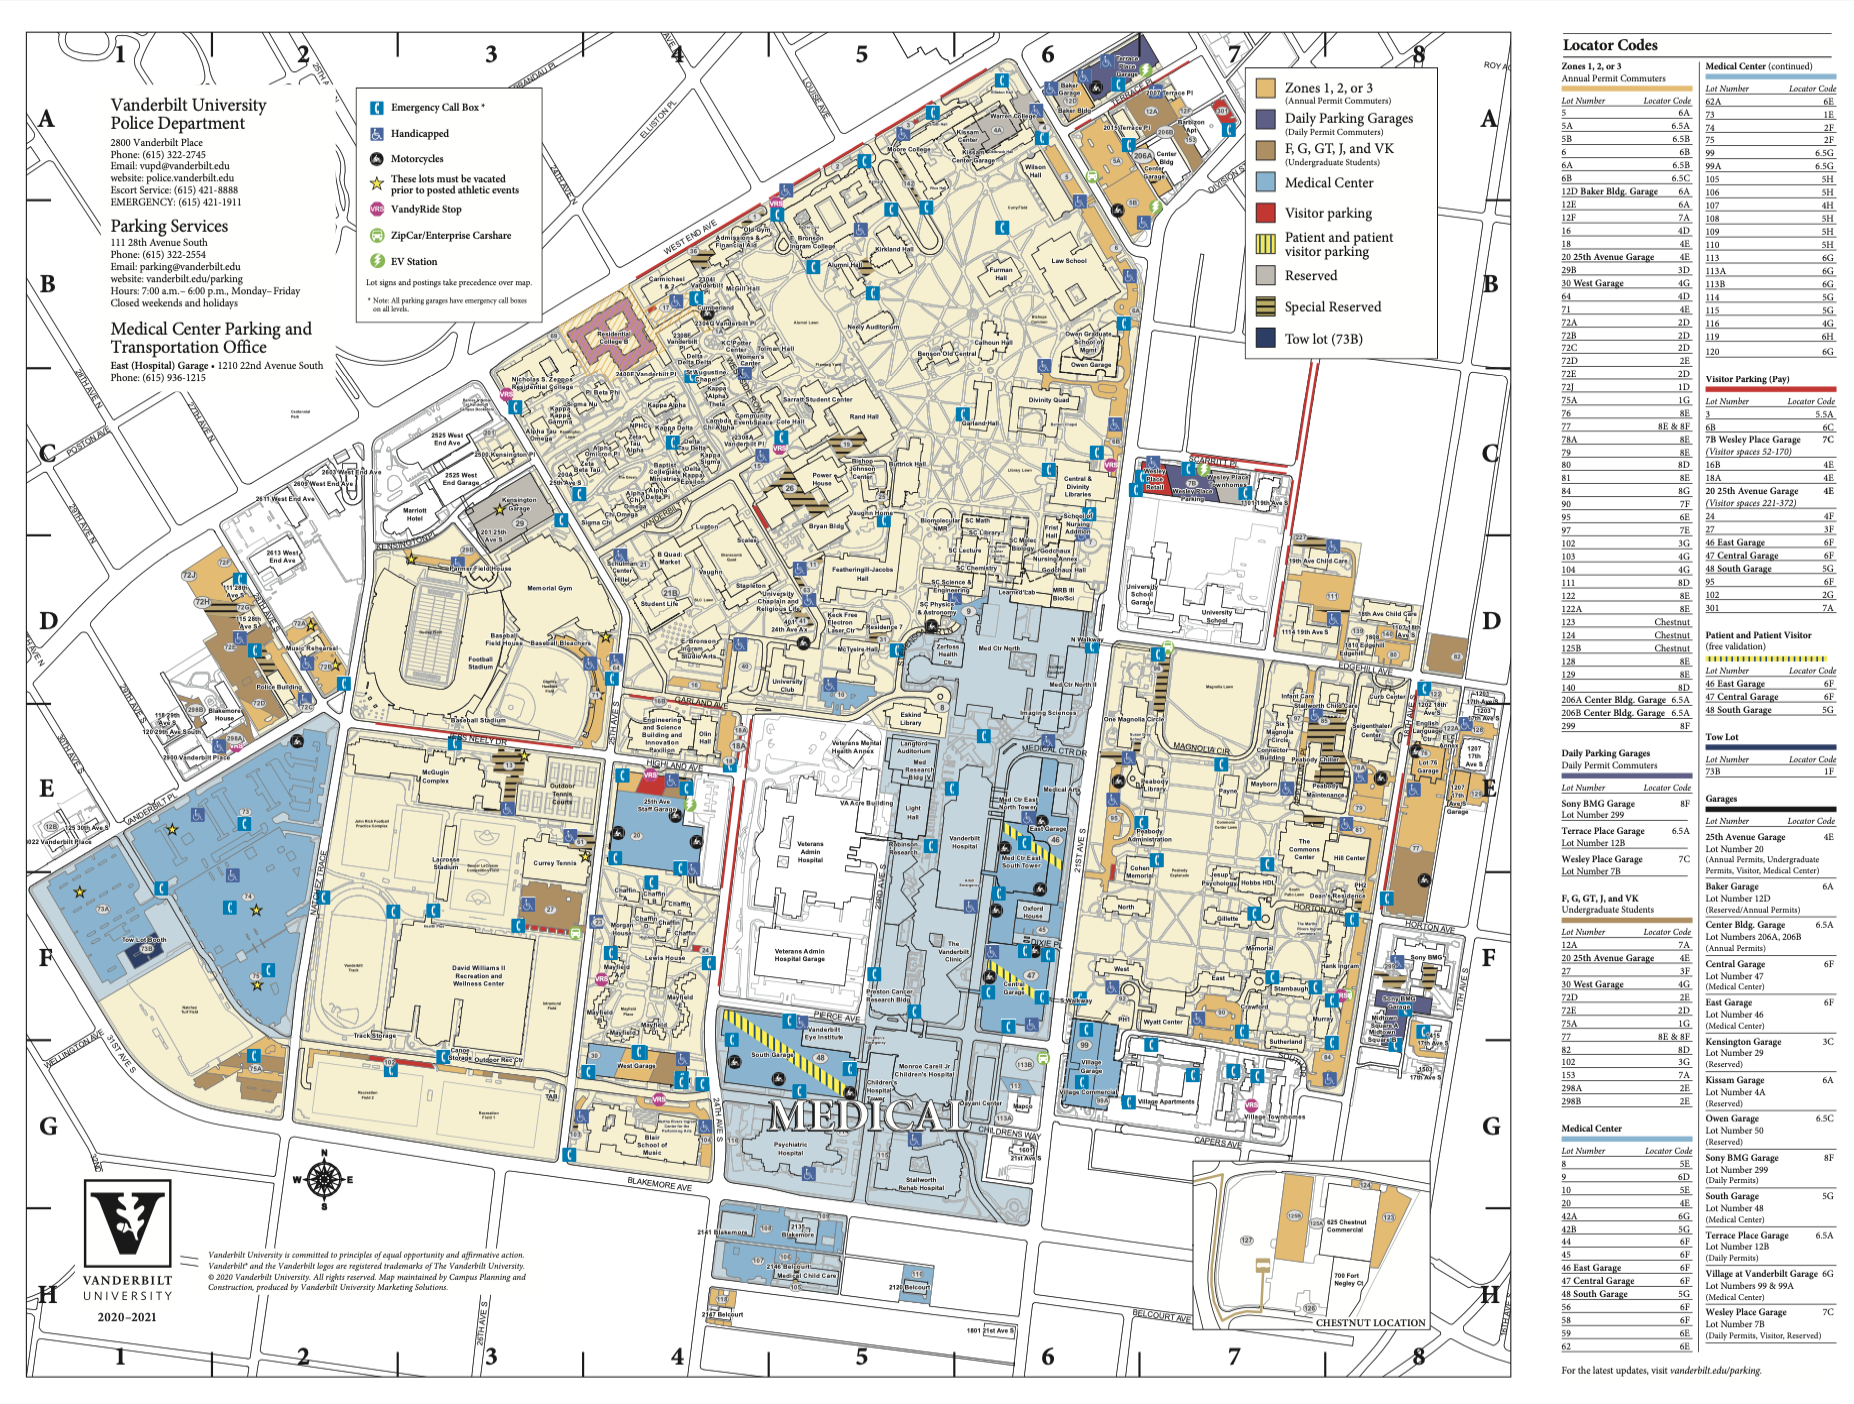 Campus parking map